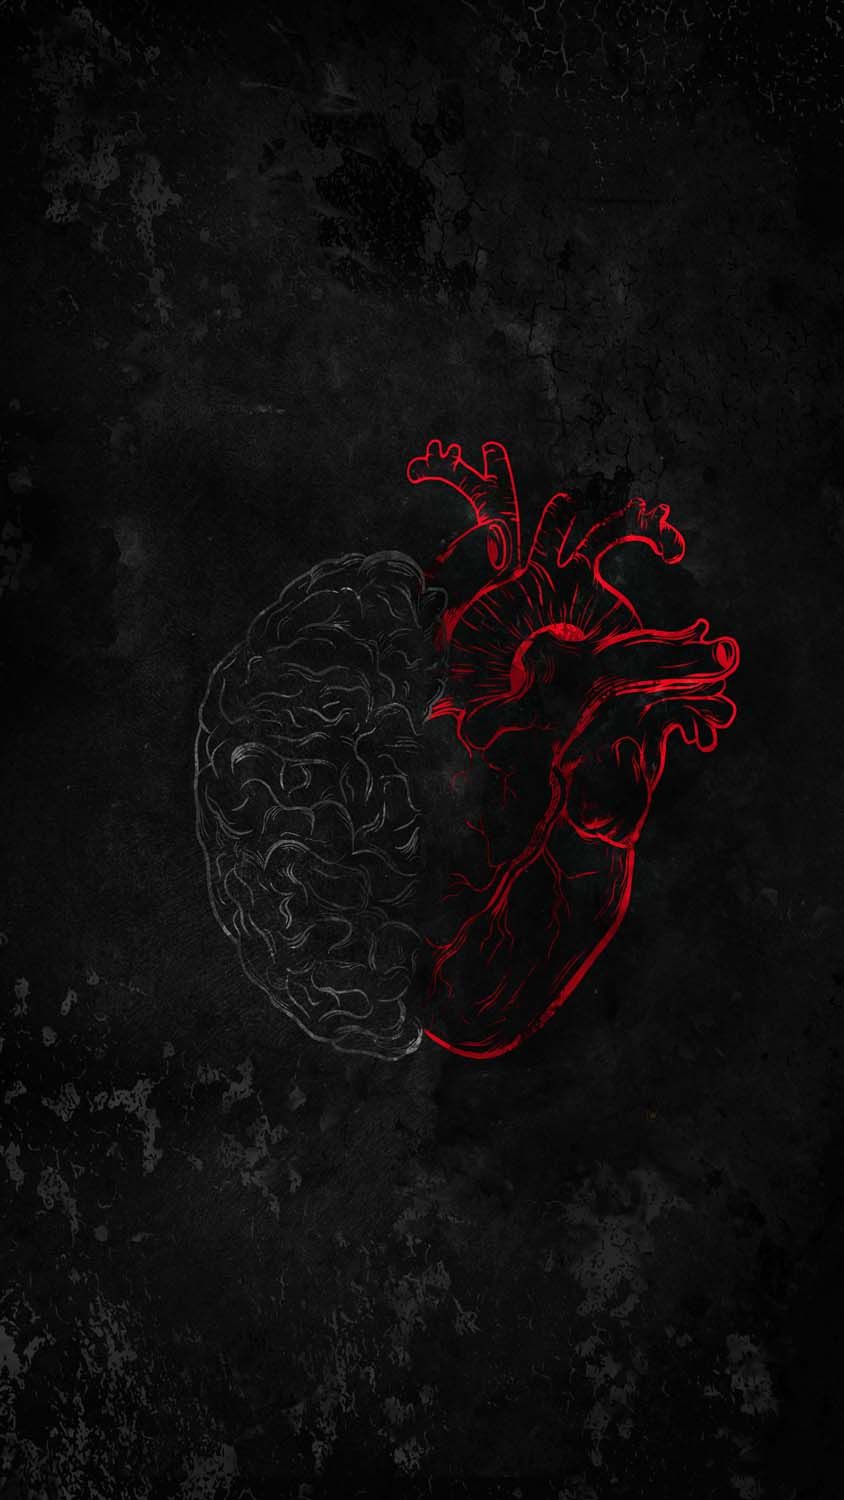 Heart Vs Brain IPhone Wallpaper HD Wallpaper : iPhone Wallpaper